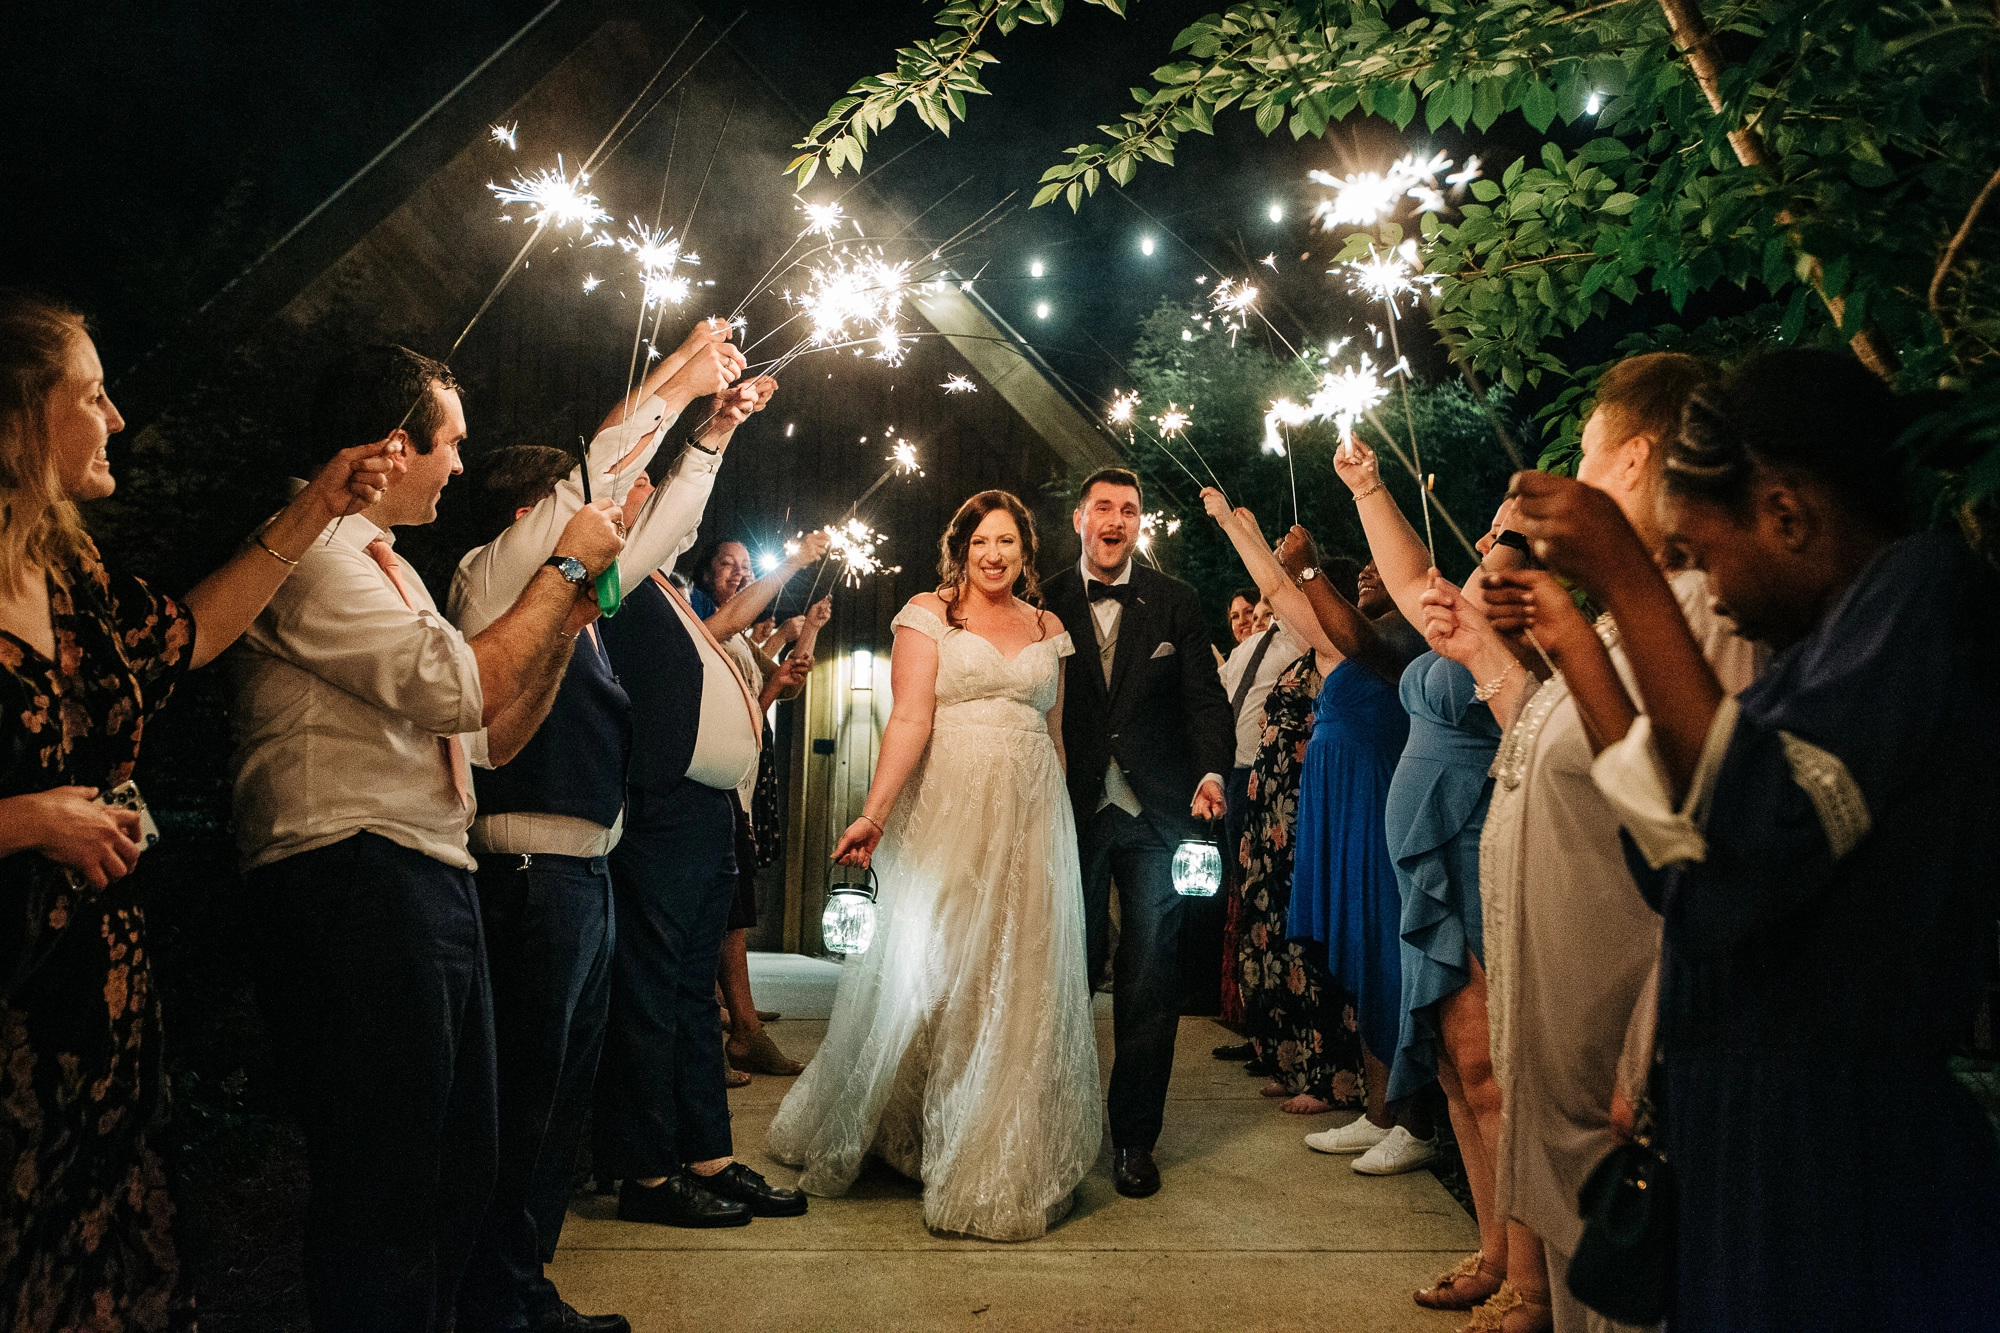 documentary wedding photographer captures the newlyweds enjoying their sparkler send off